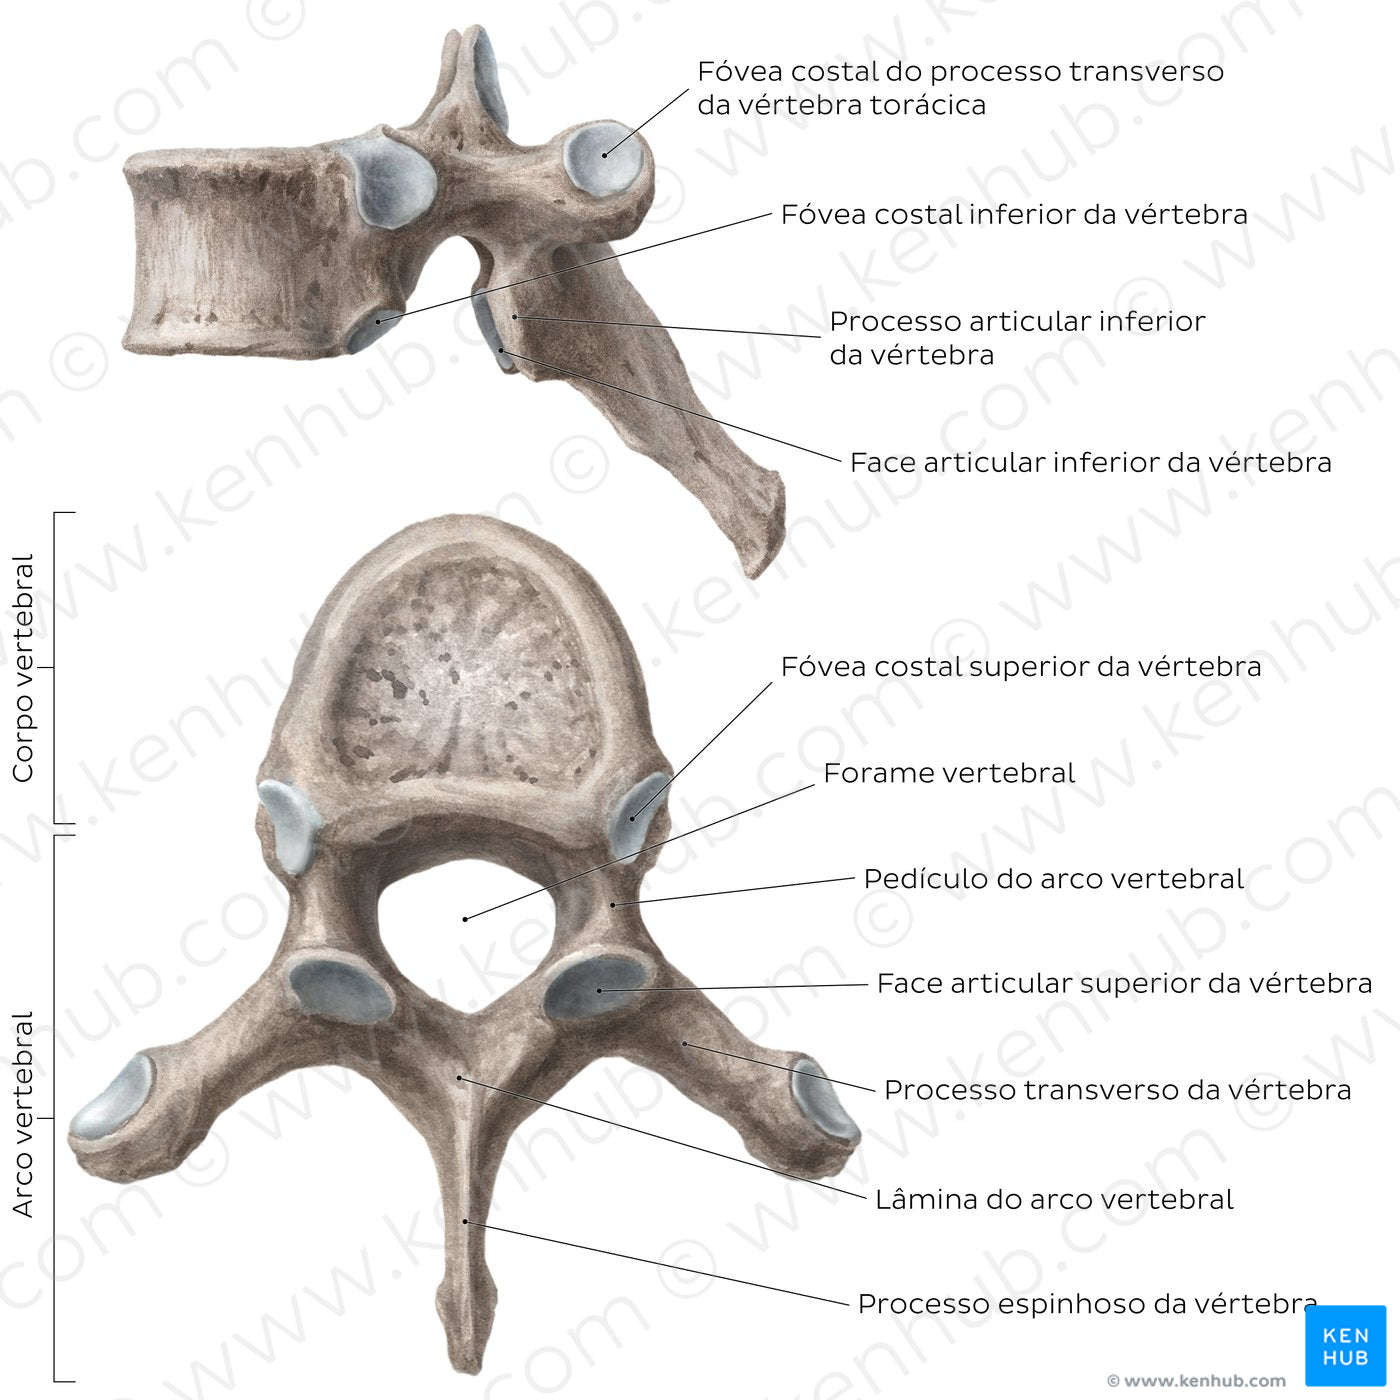 Typical thoracic vertebra (Portuguese)